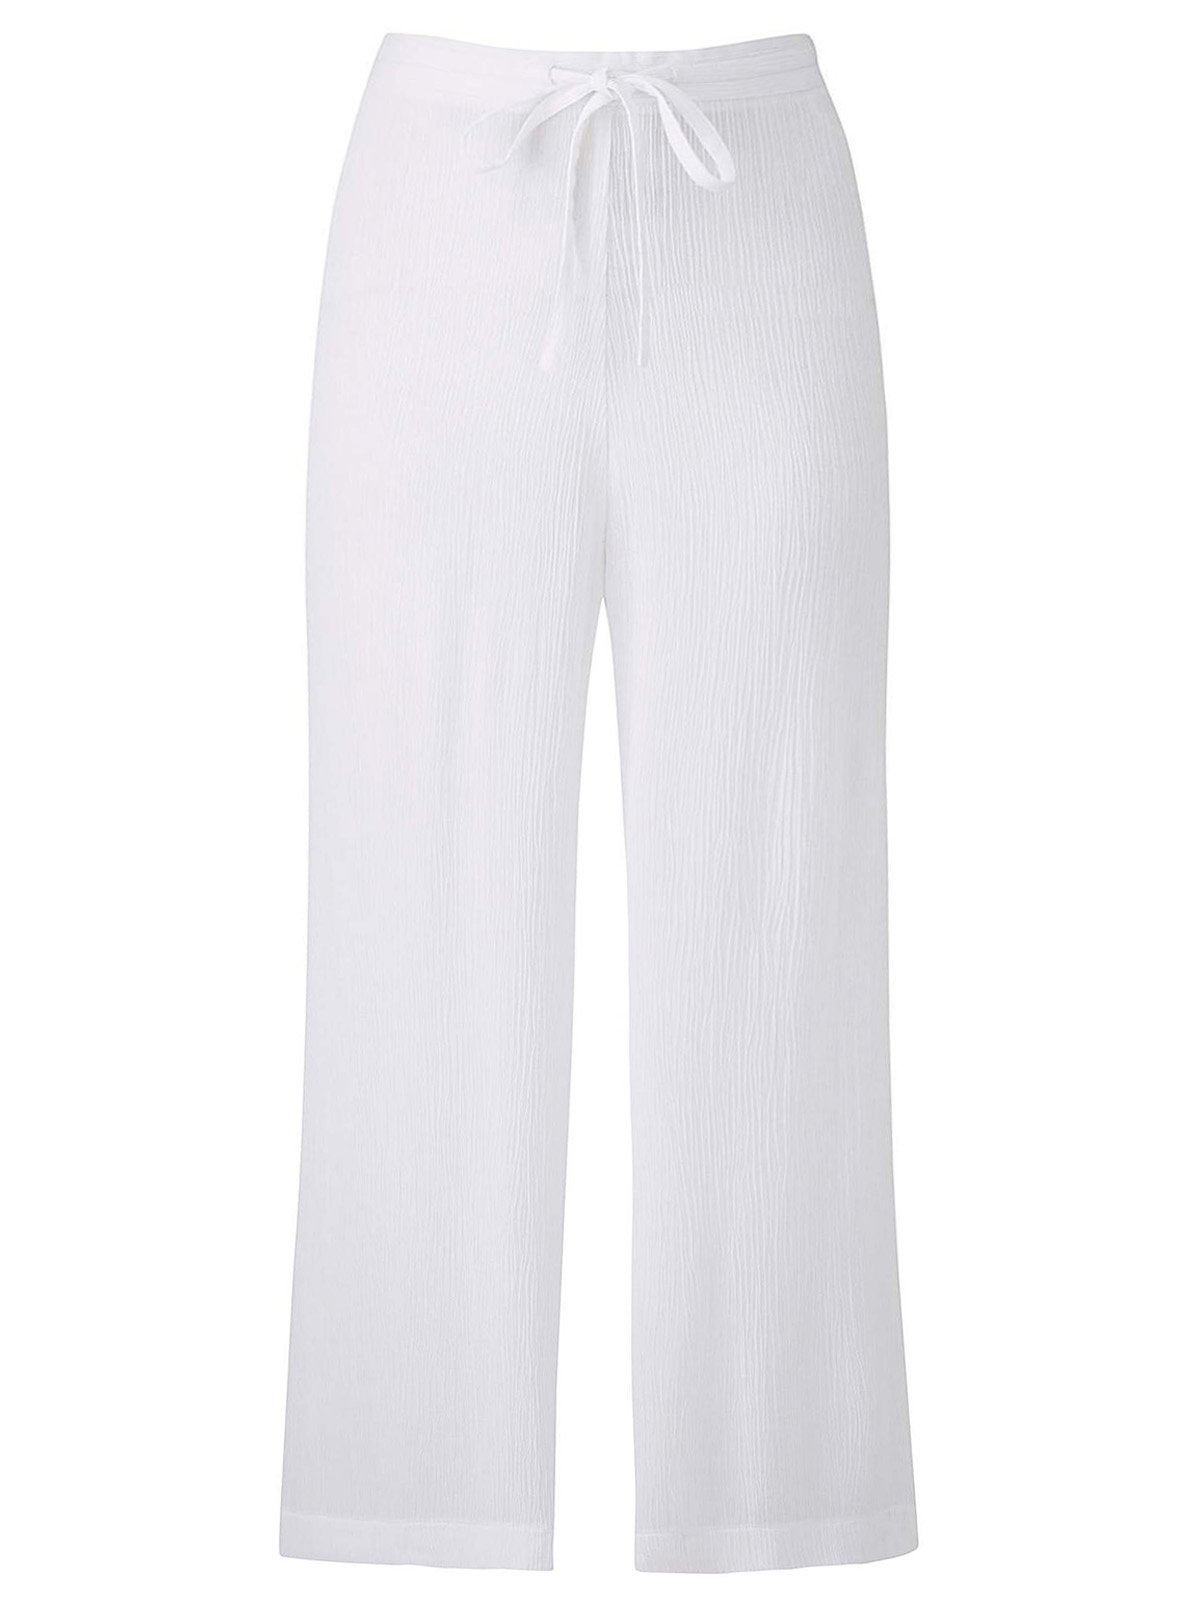 Julipa - - Julipa WHITE Crinkle Drawstring Trousers - Size 10 to 30